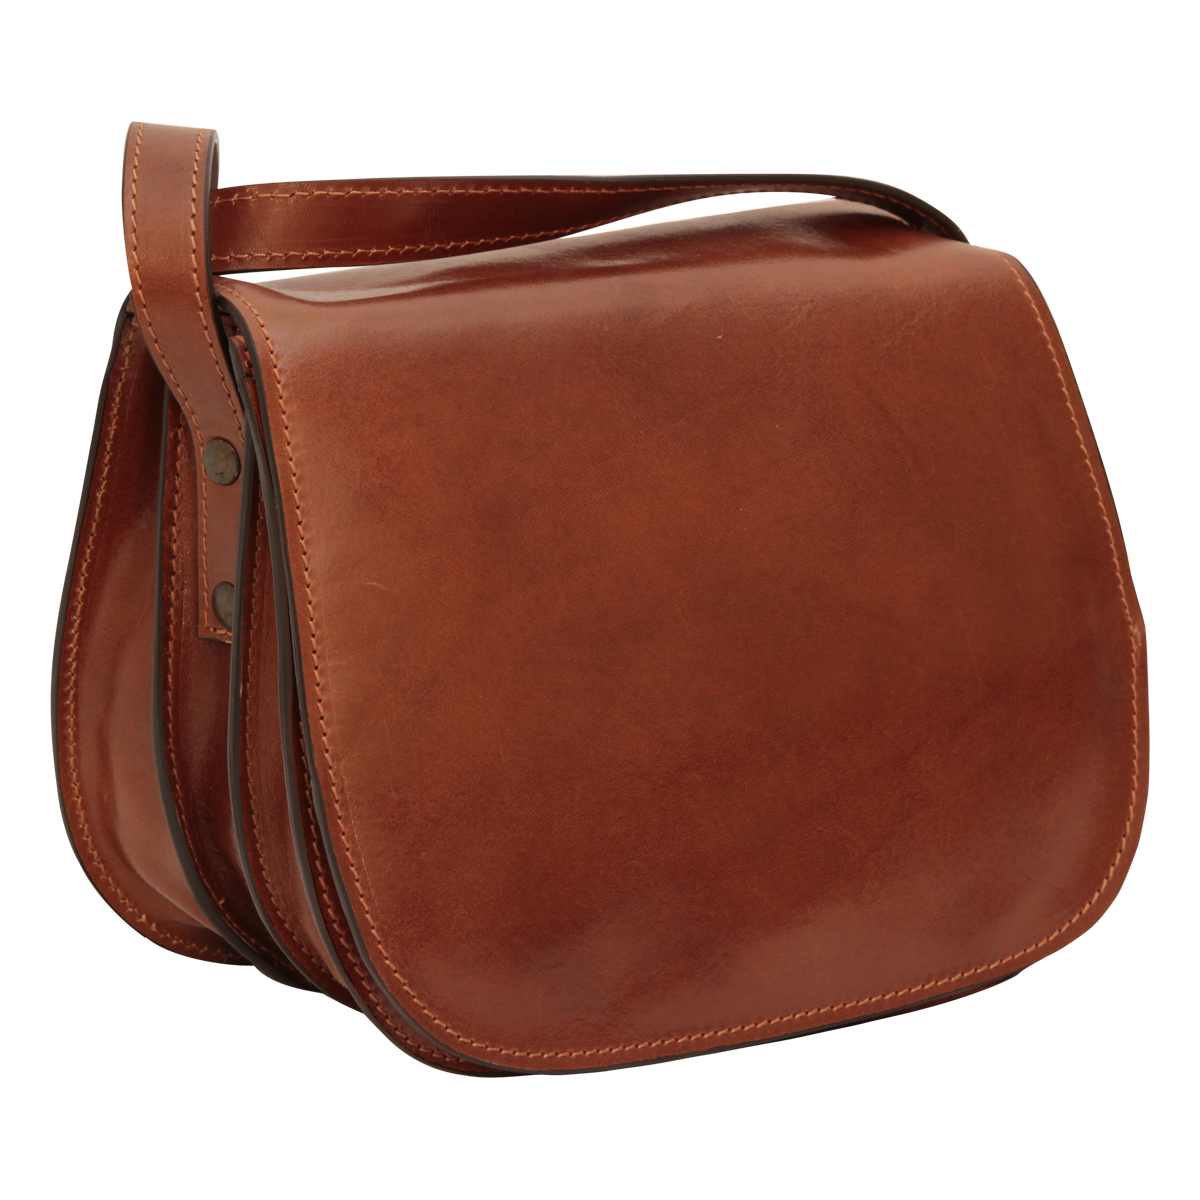 Full grain calfskin shoulder bag - brown | 209805MA UK | Old Angler Firenze